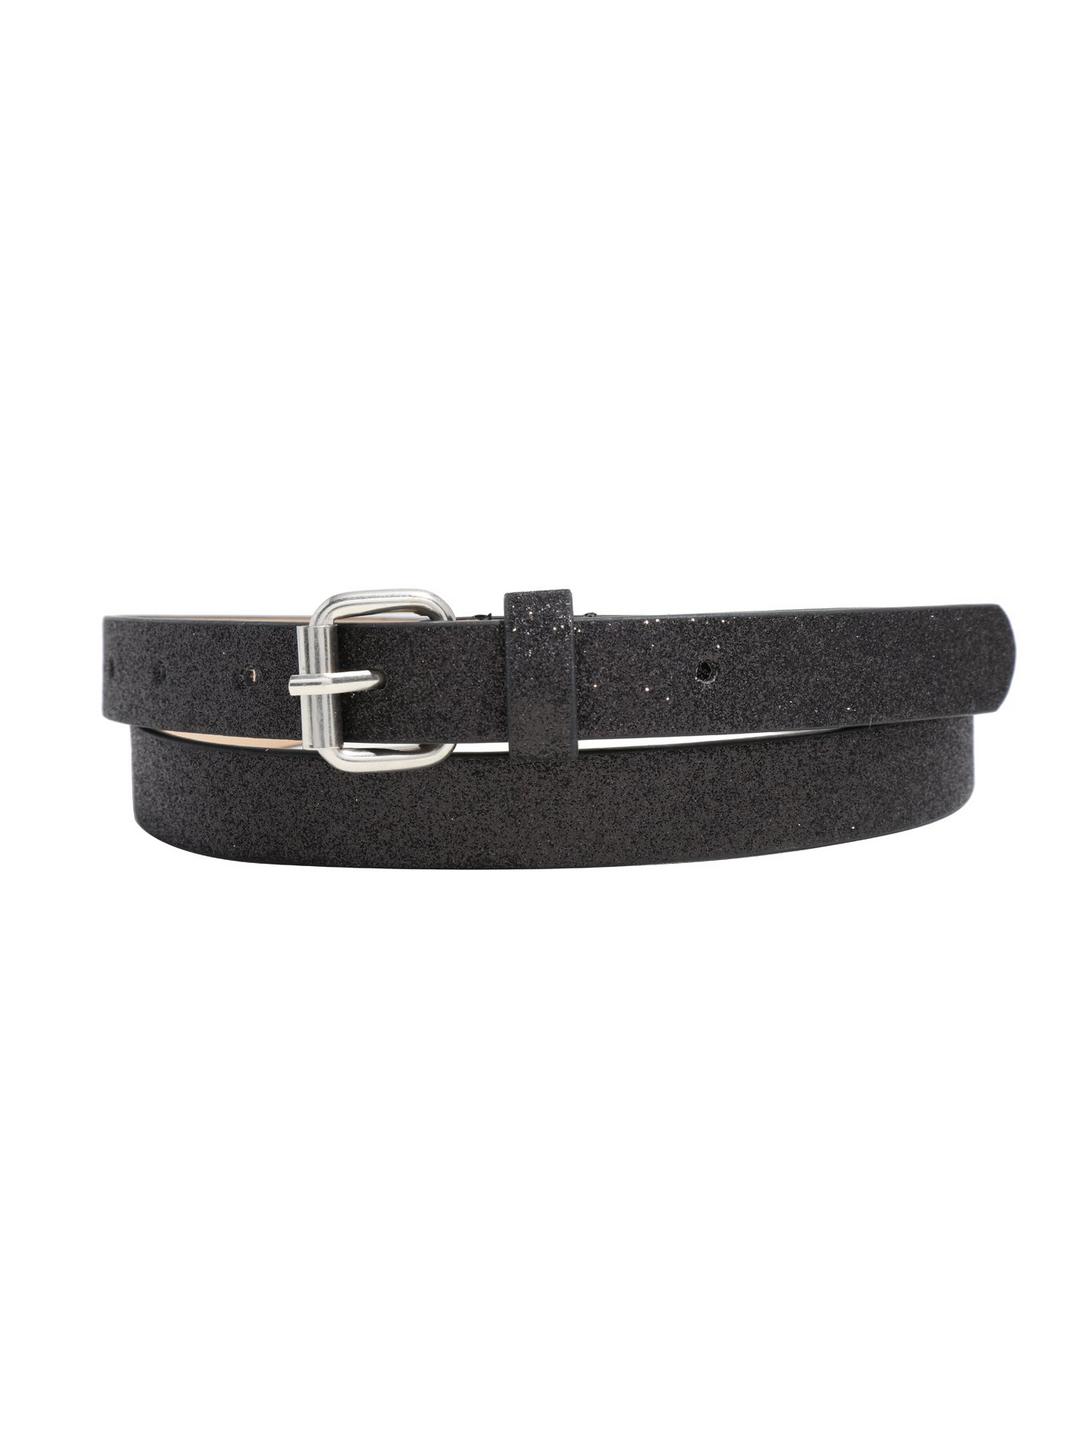 Black Glitter Skinny Belt, , hi-res